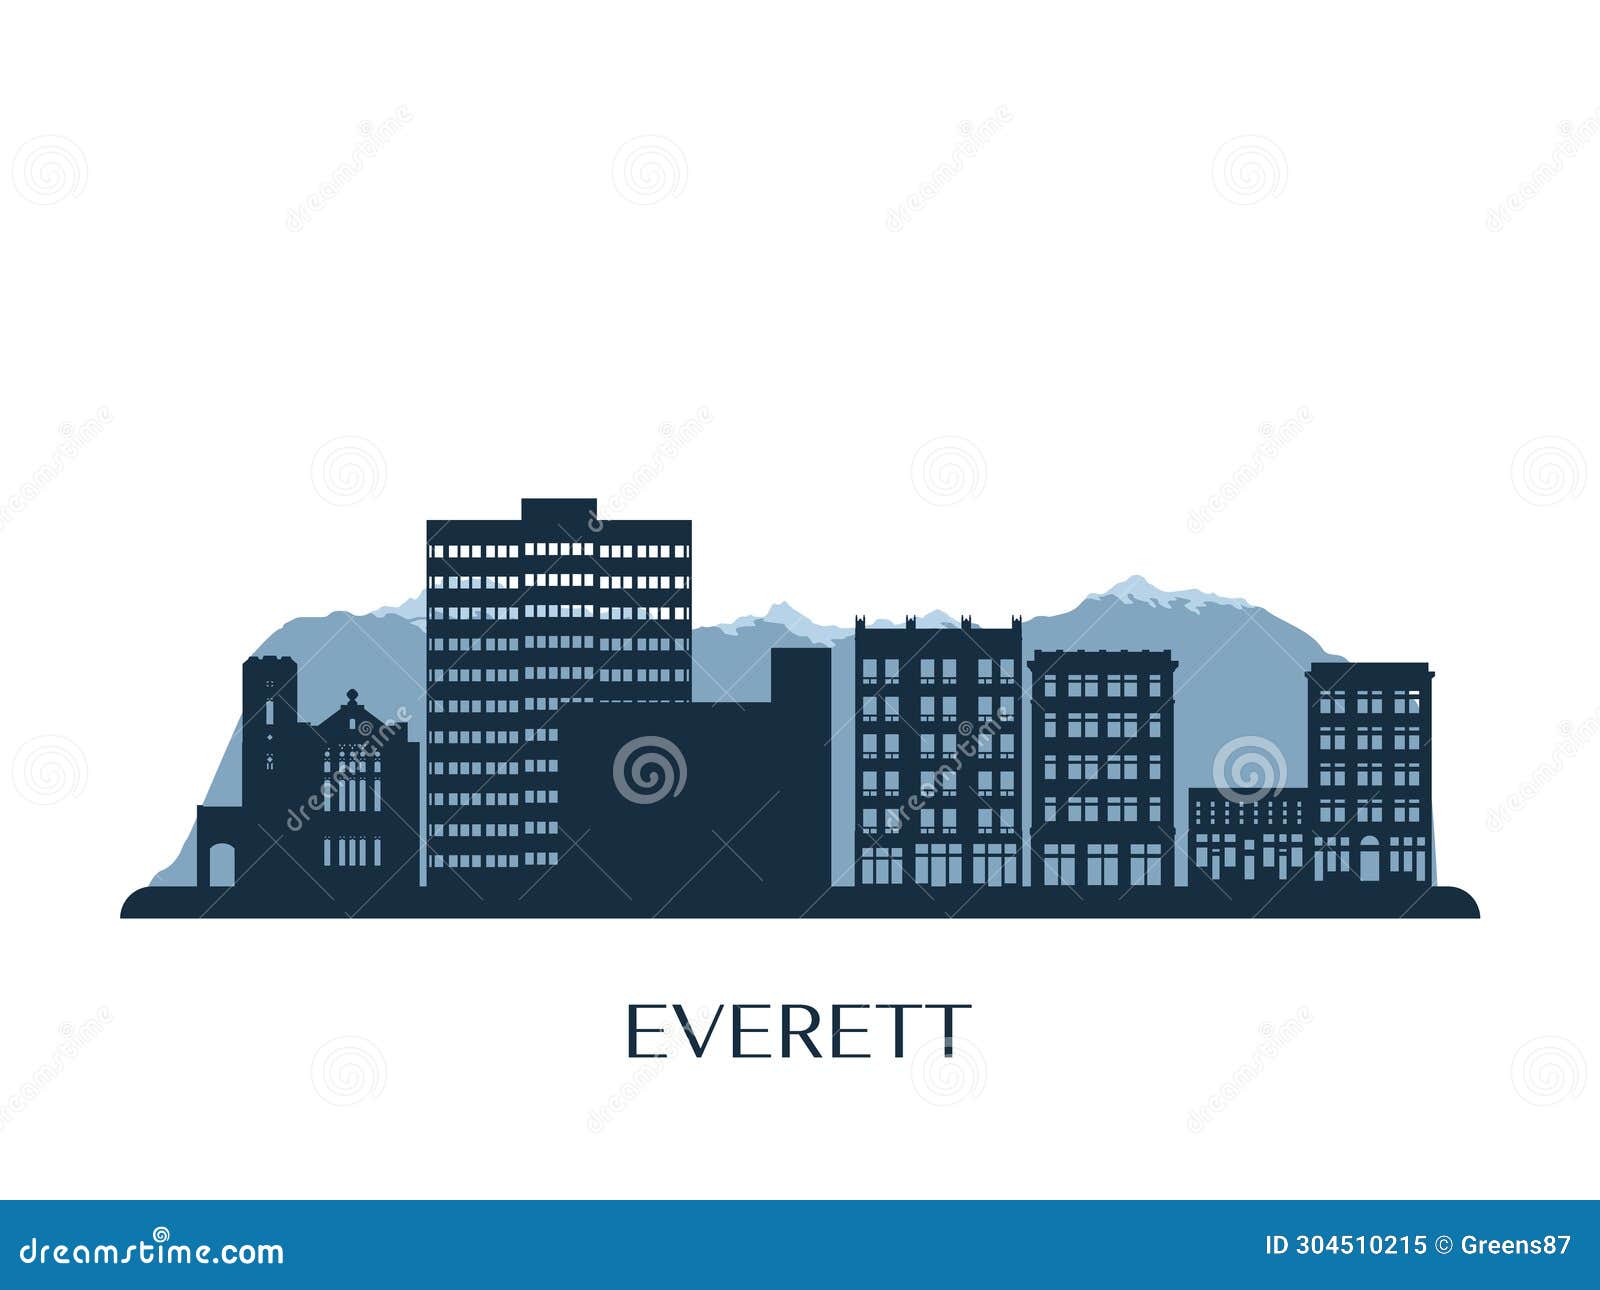 everett, wa skyline, monochrome silhouette.